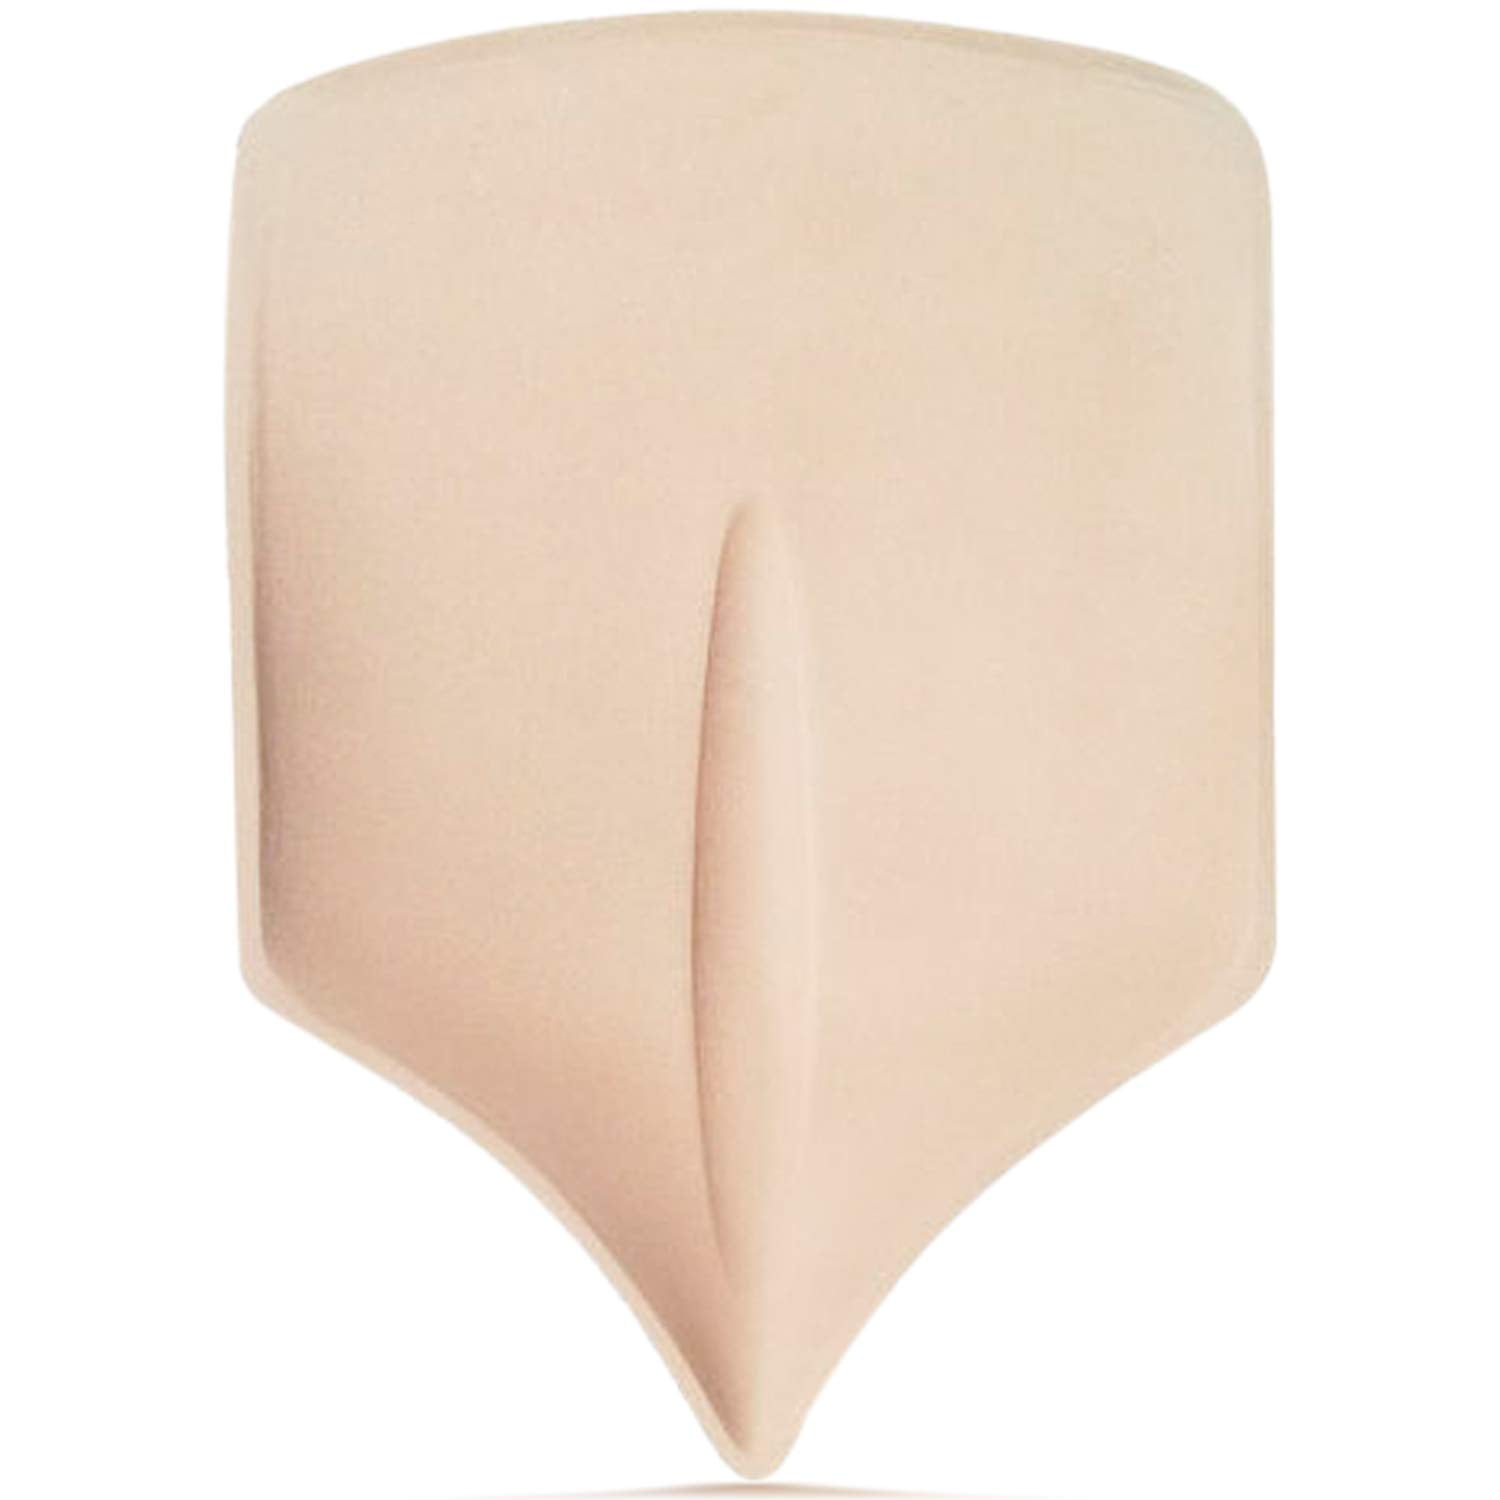 Back board Lipo Foam Lumbar Molder BBL Back Board Liposuction Post Sur –  Amour Body